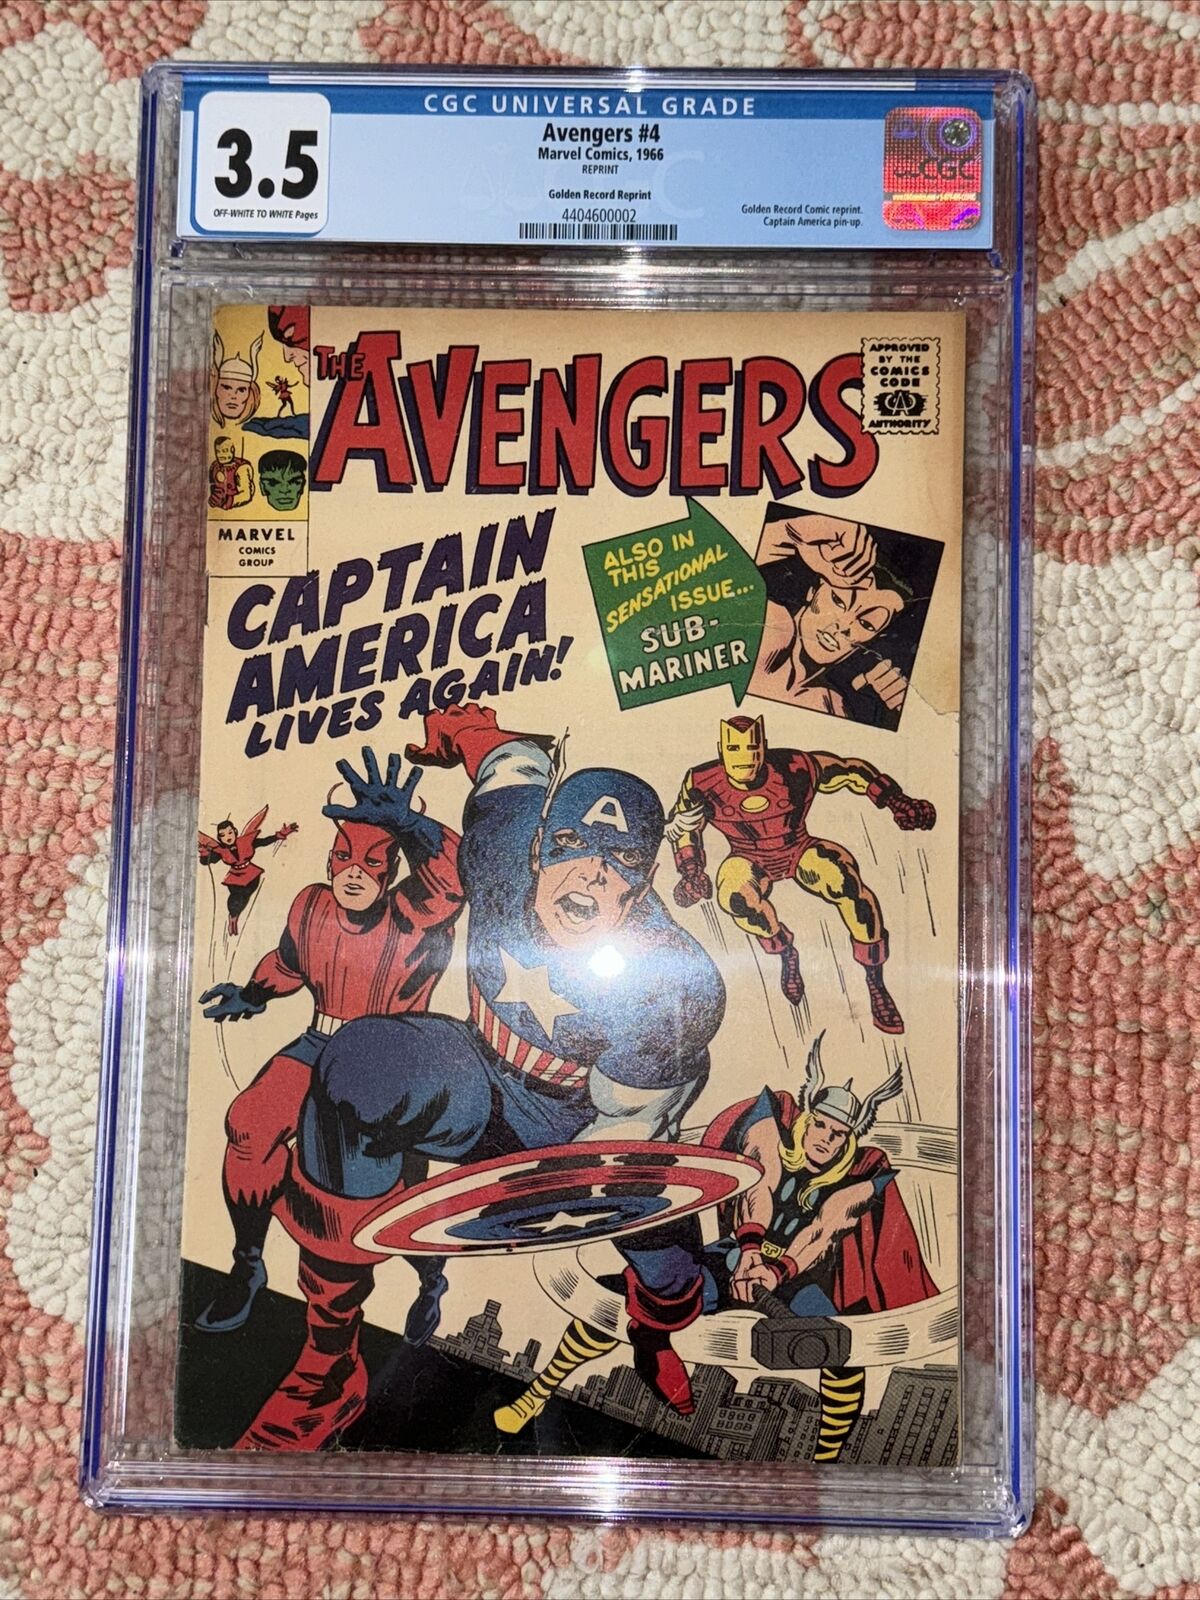 Avengers #4 Golden Record Reprint (1966) ⭐ CGC 3.5 ⭐ Captain America GRR Comic